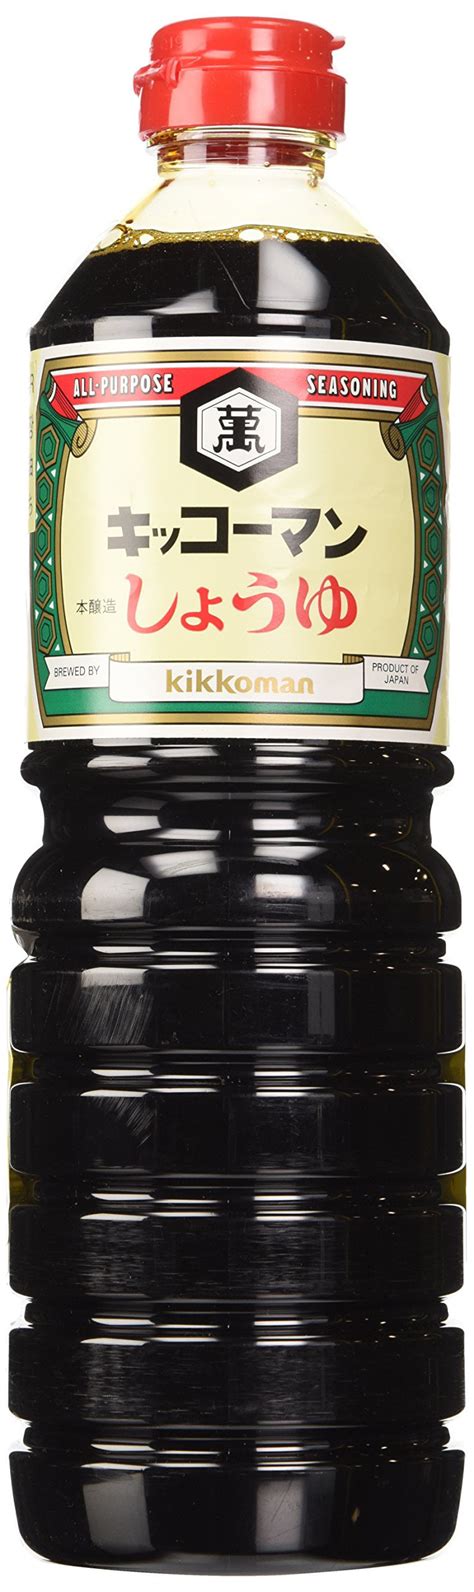 Kikkoman Japan Made Soy Sauce 338 Ounce